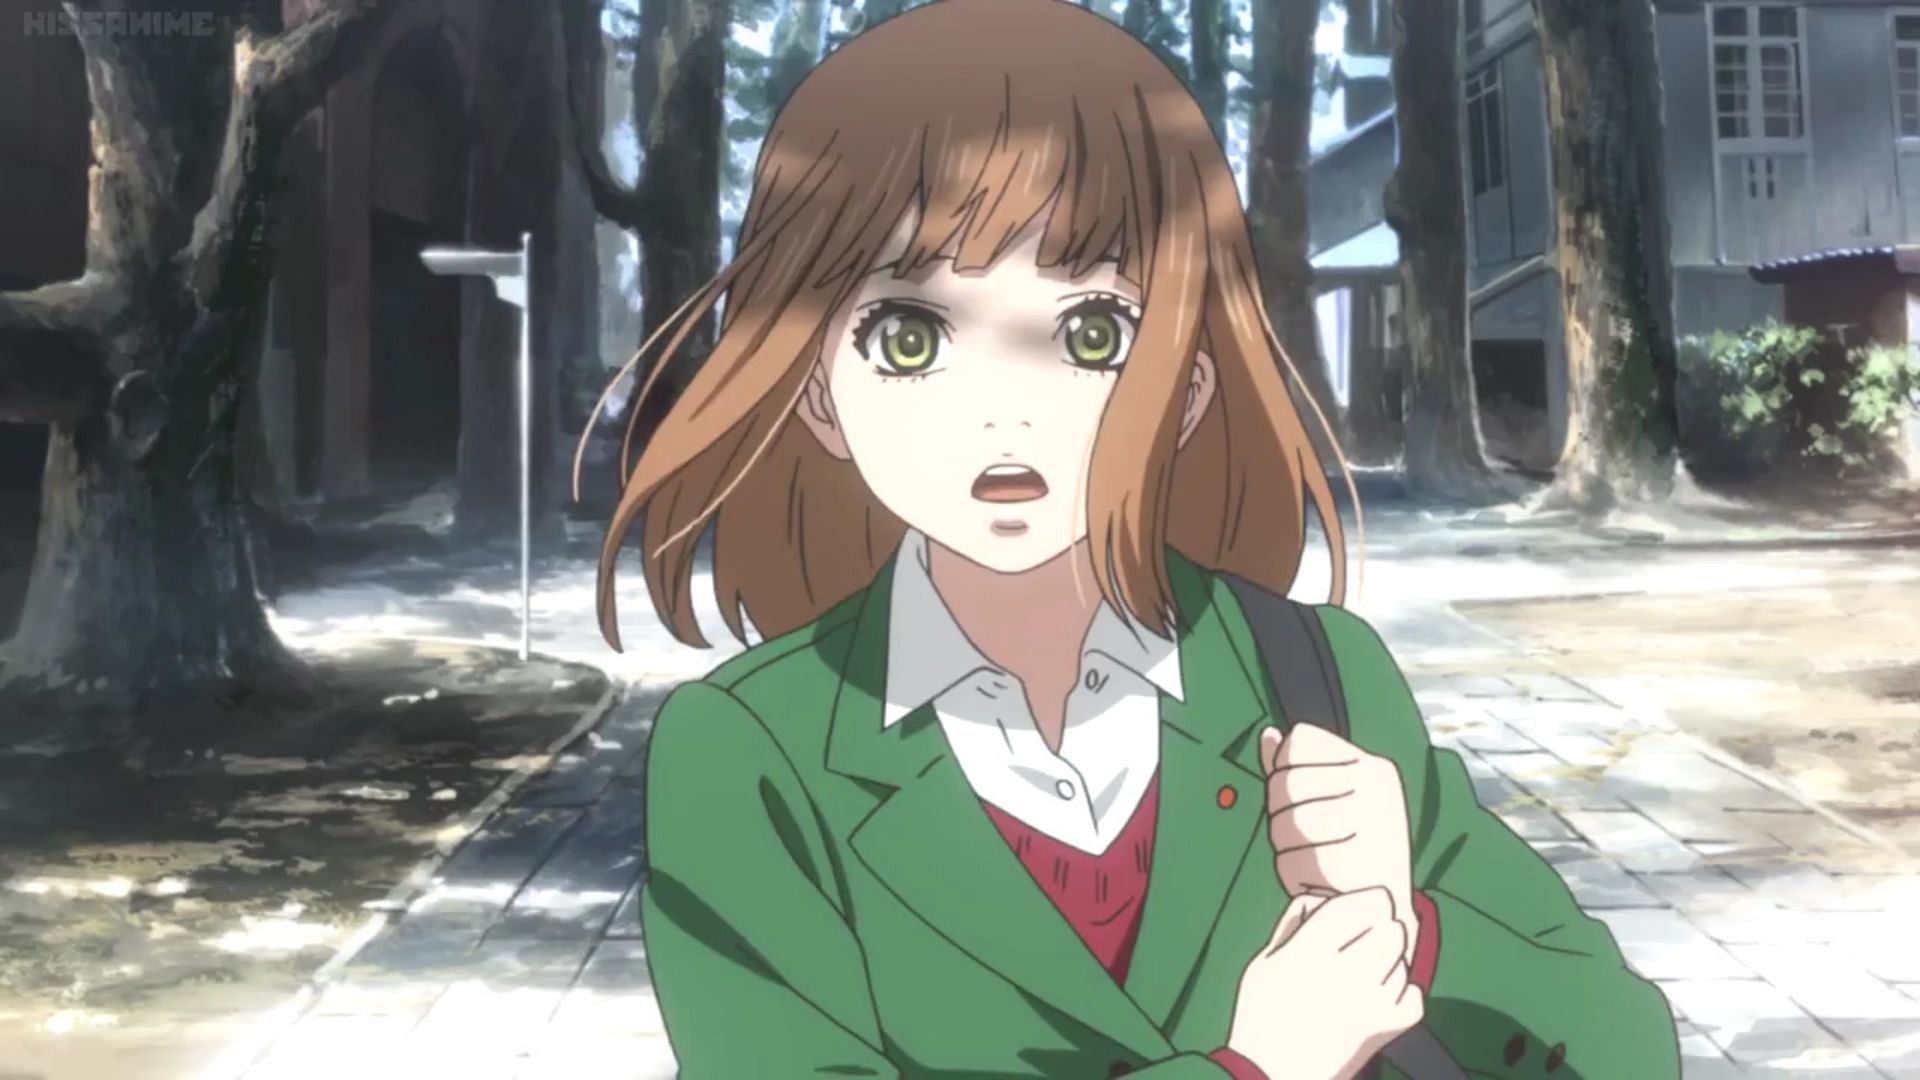 Takamiya Naho as seen in the anime (Image via Telecom Animation Film)